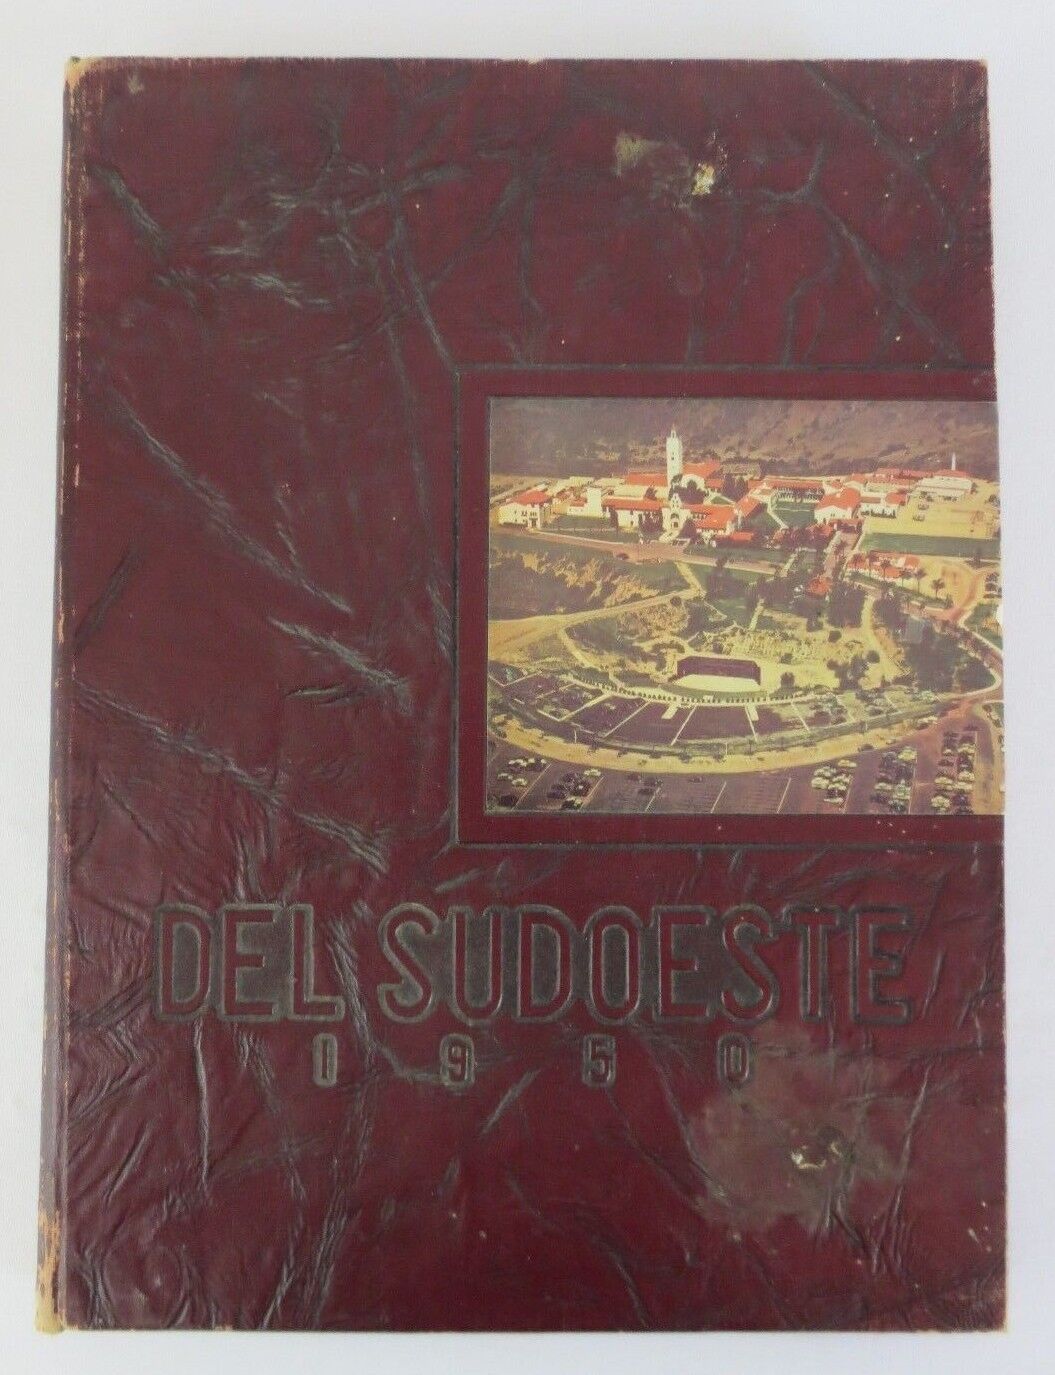 1950 Yearbook Del Sudoeste San Diego State University SDSU California Photos